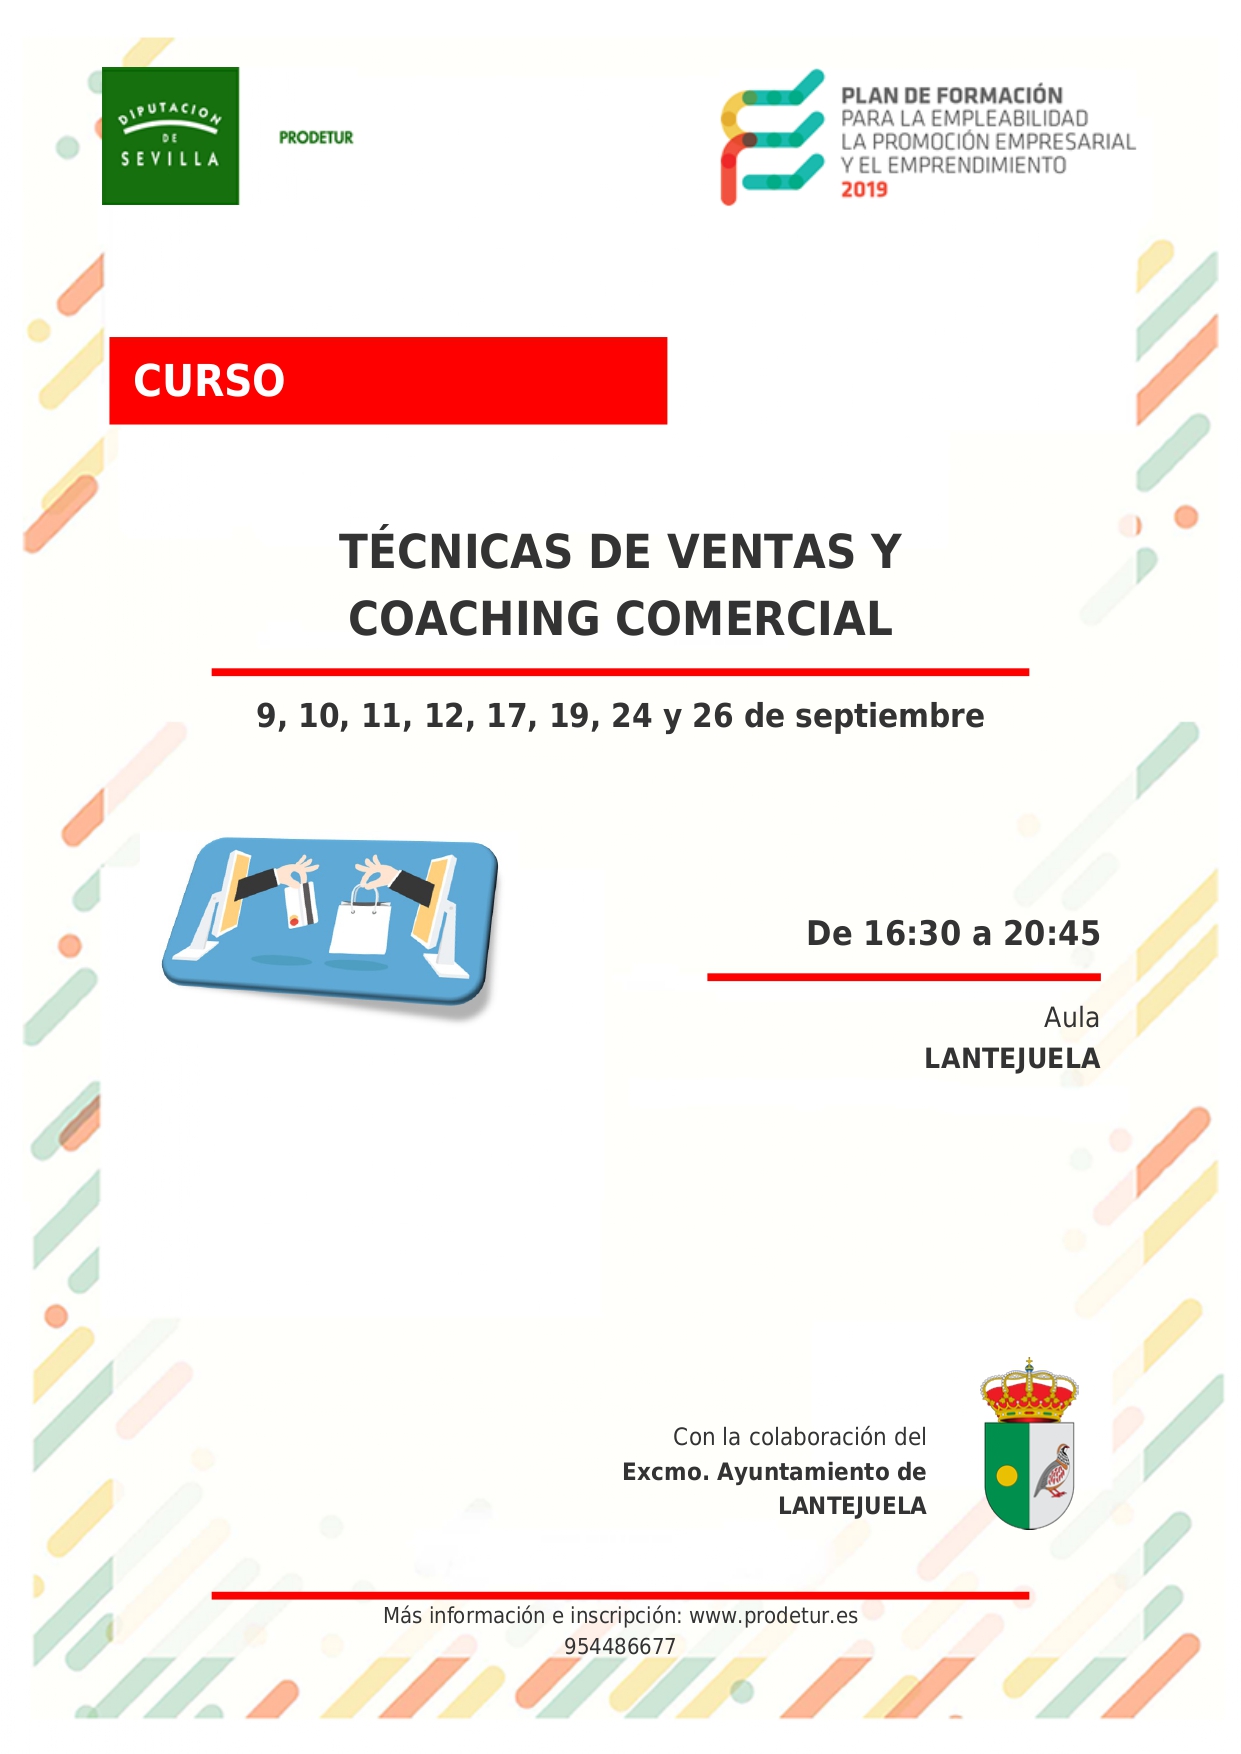 Cartel Curso Técnicas de Venta Lantejuela_pages-to-jpg-0001